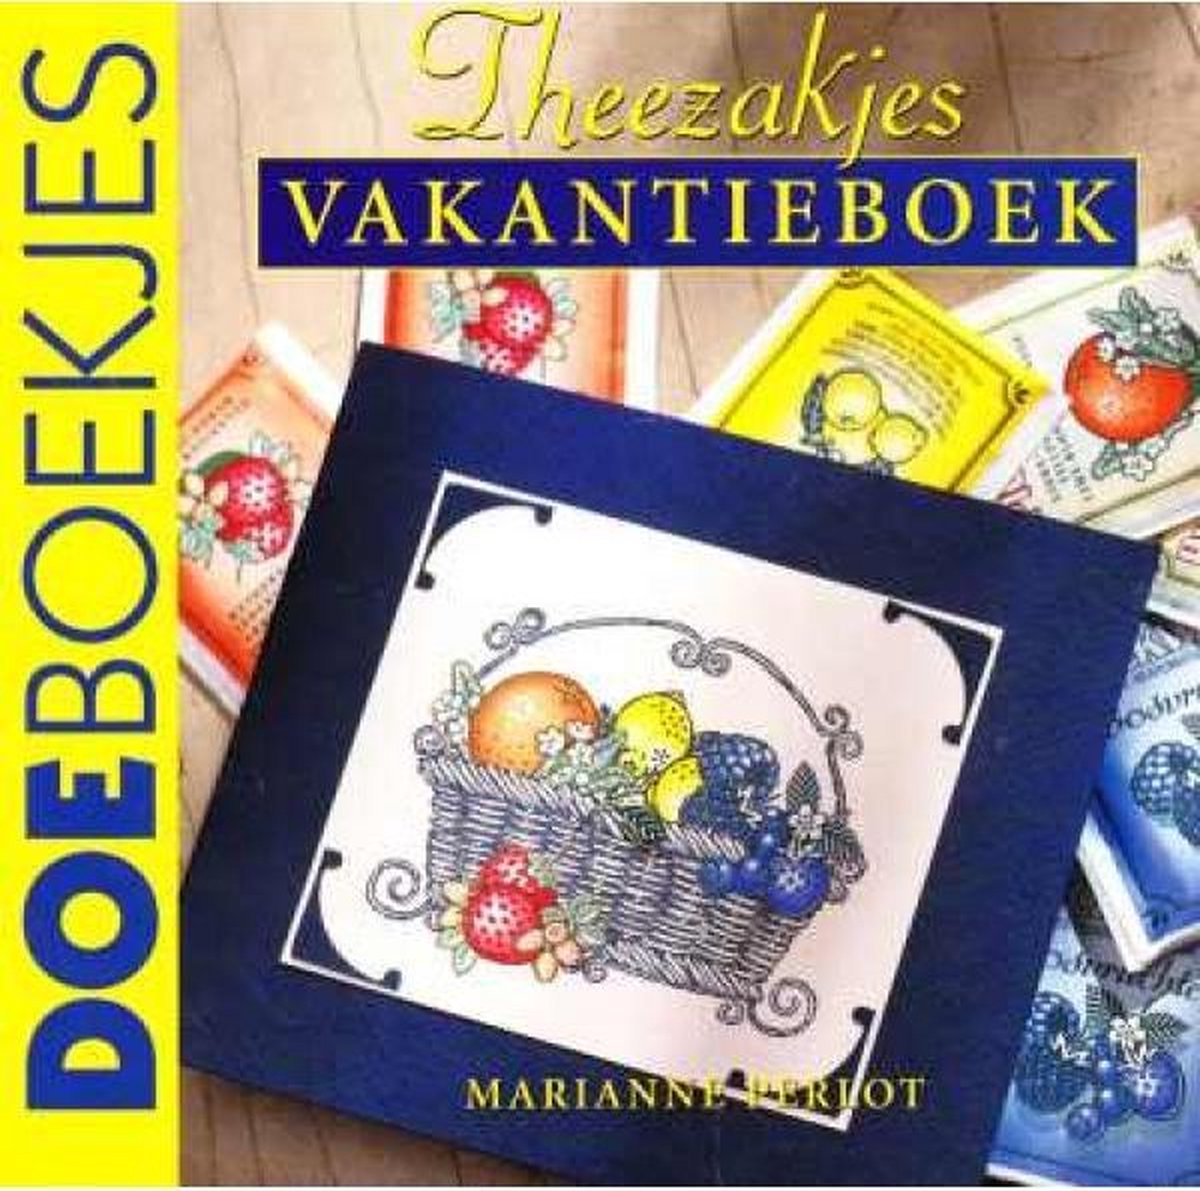 Theezakjes vakantieboek / Doeboekjes